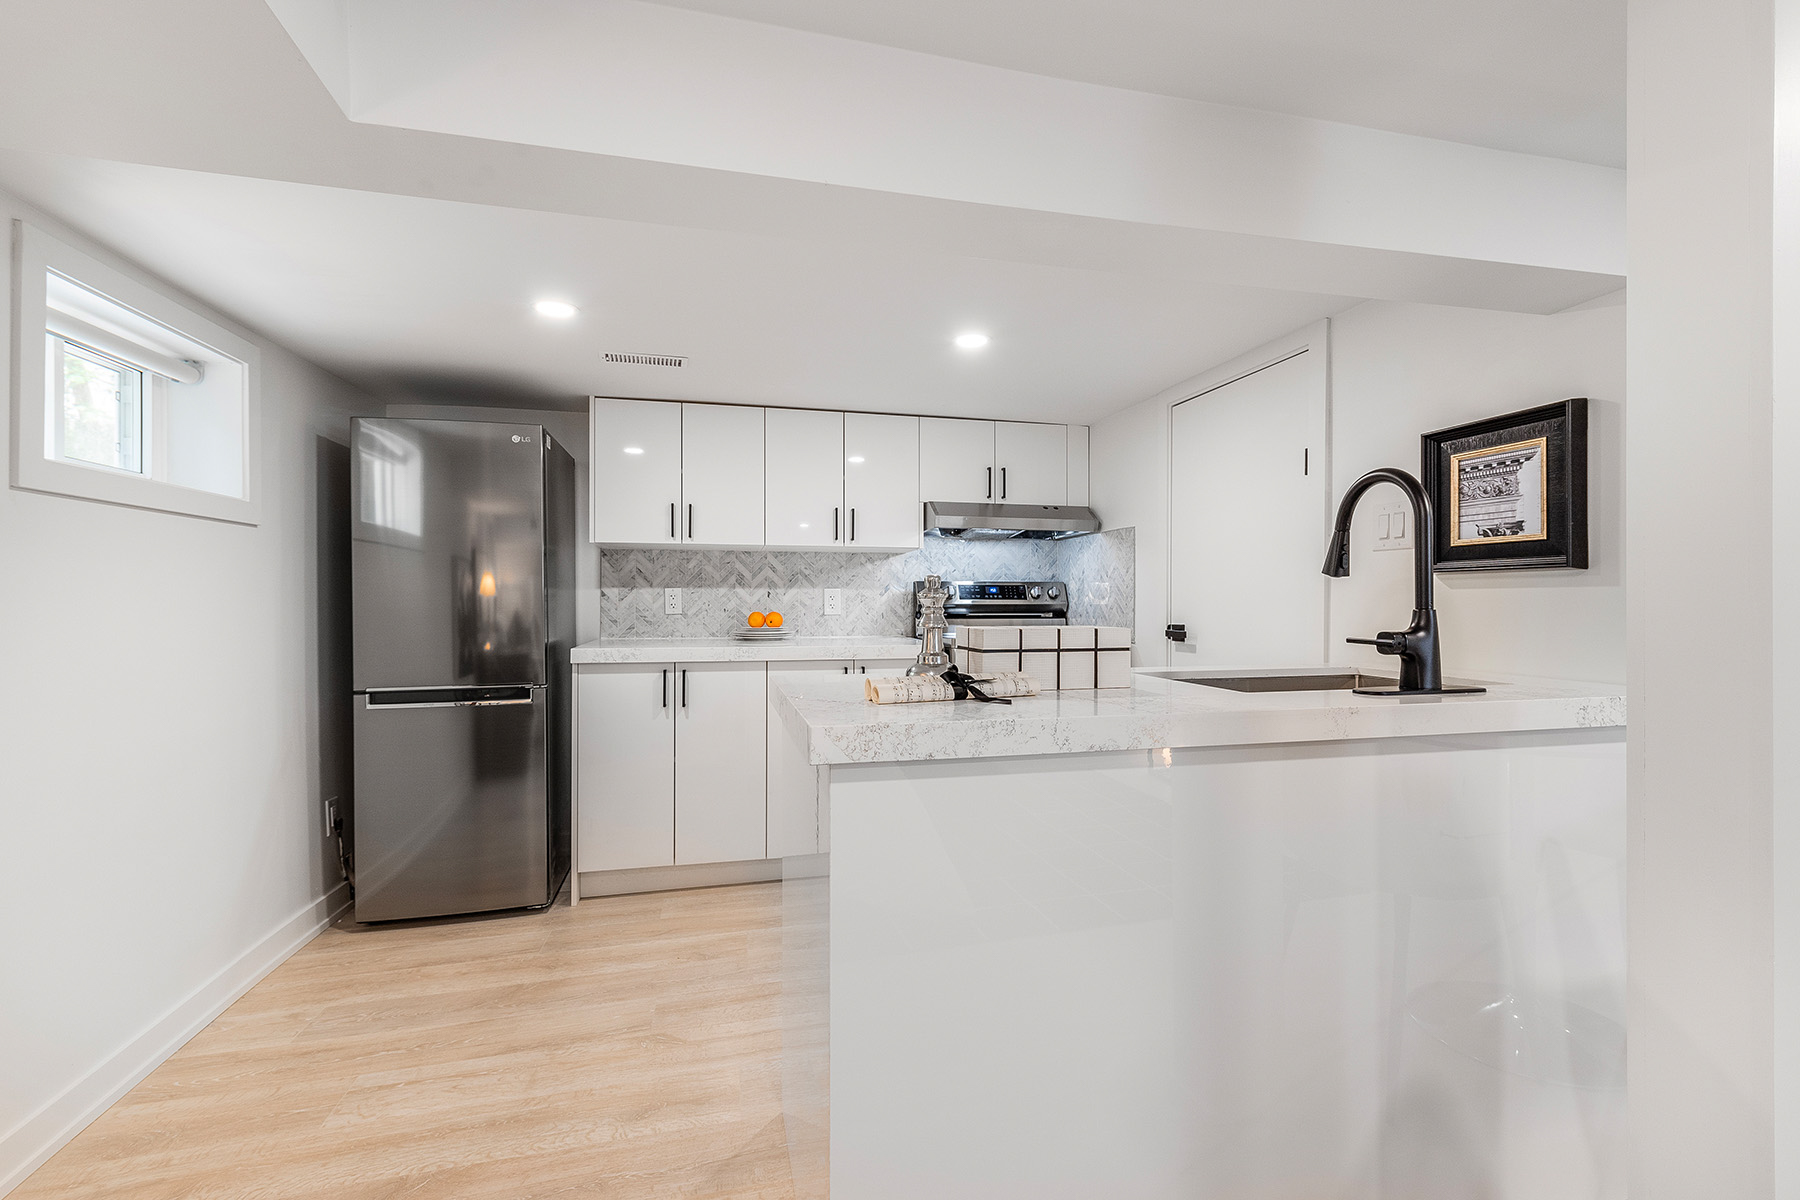 54 Huntington Avenue basement kitchen with shiny white cabinets, white quartz counters and LED lights.